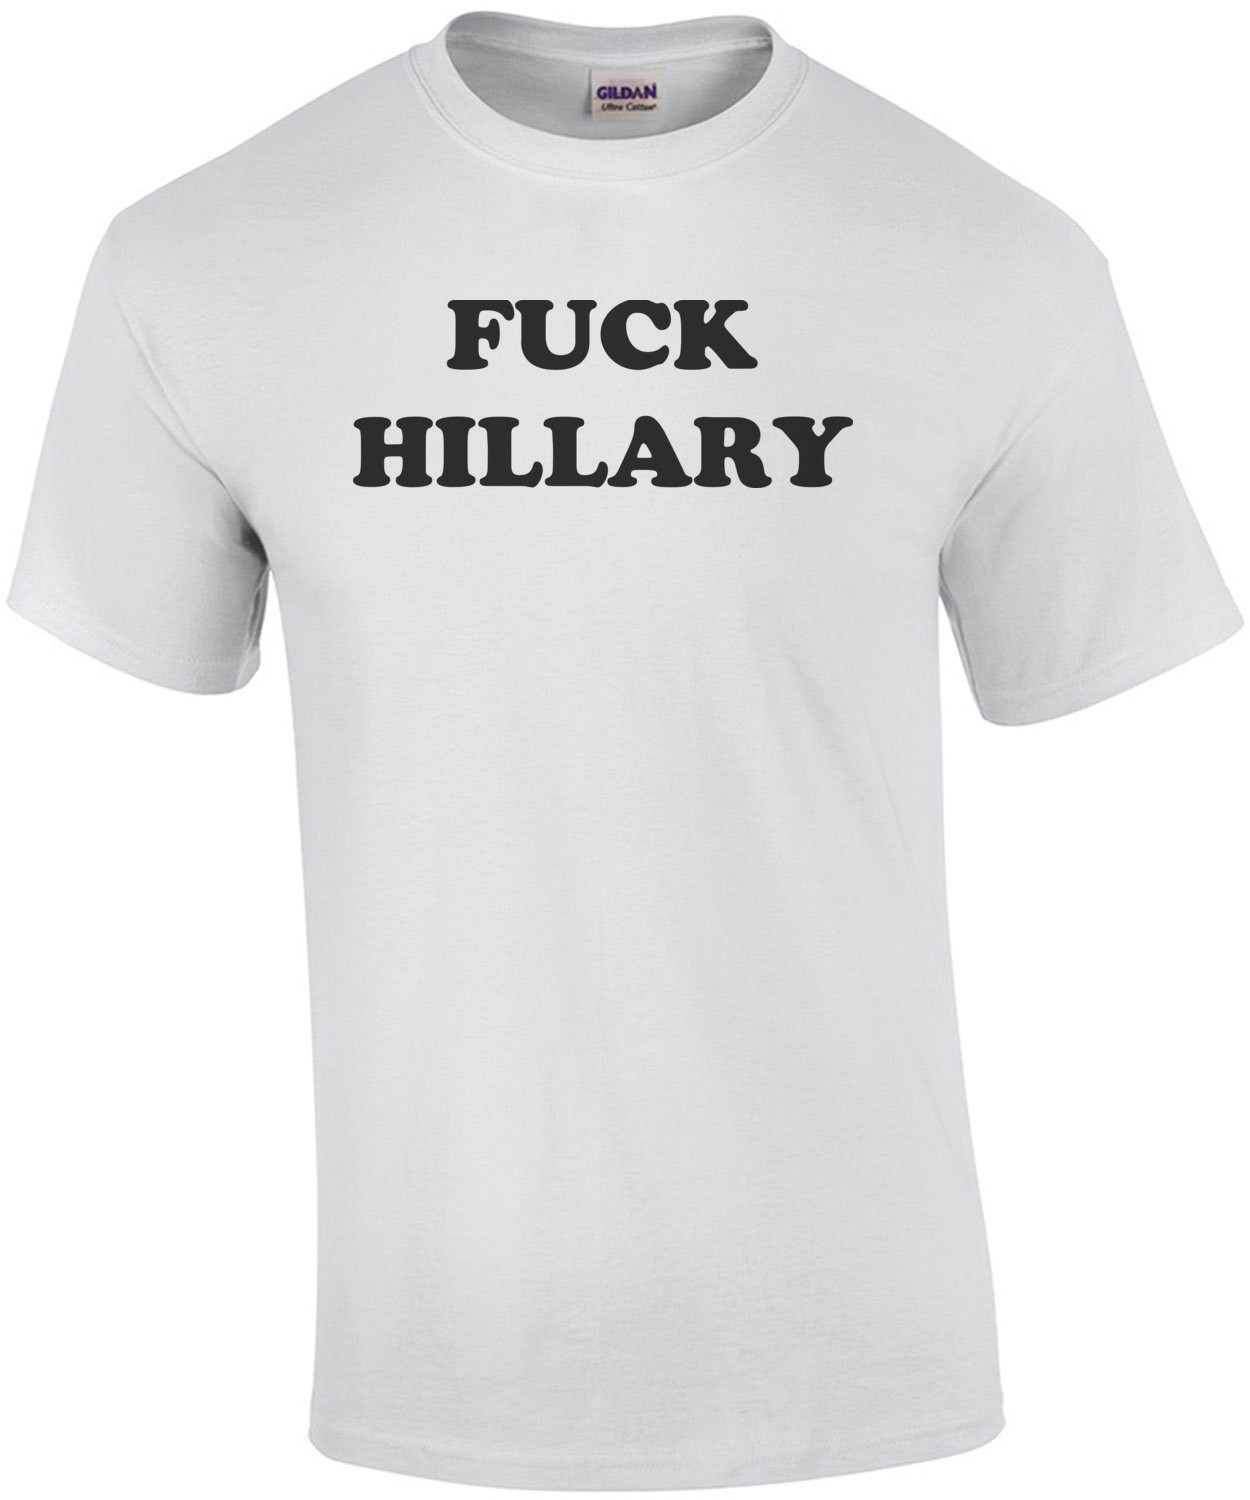 FUCK HILLARY - Anti Hillary Clinton T-Shirt